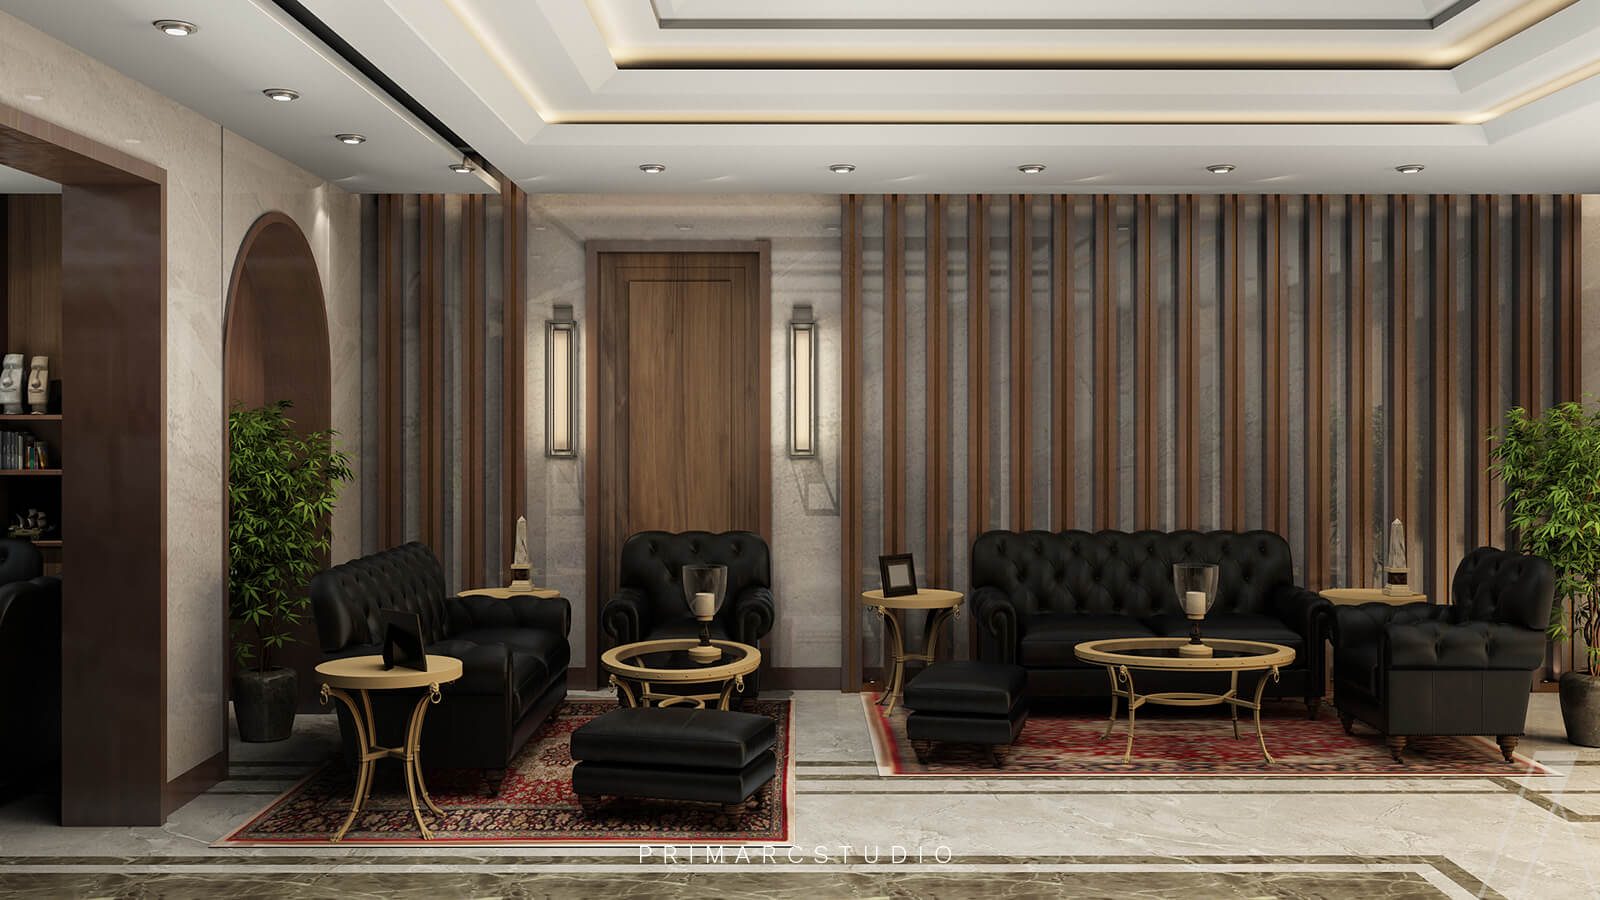 Sitting area in a lounge's interior design